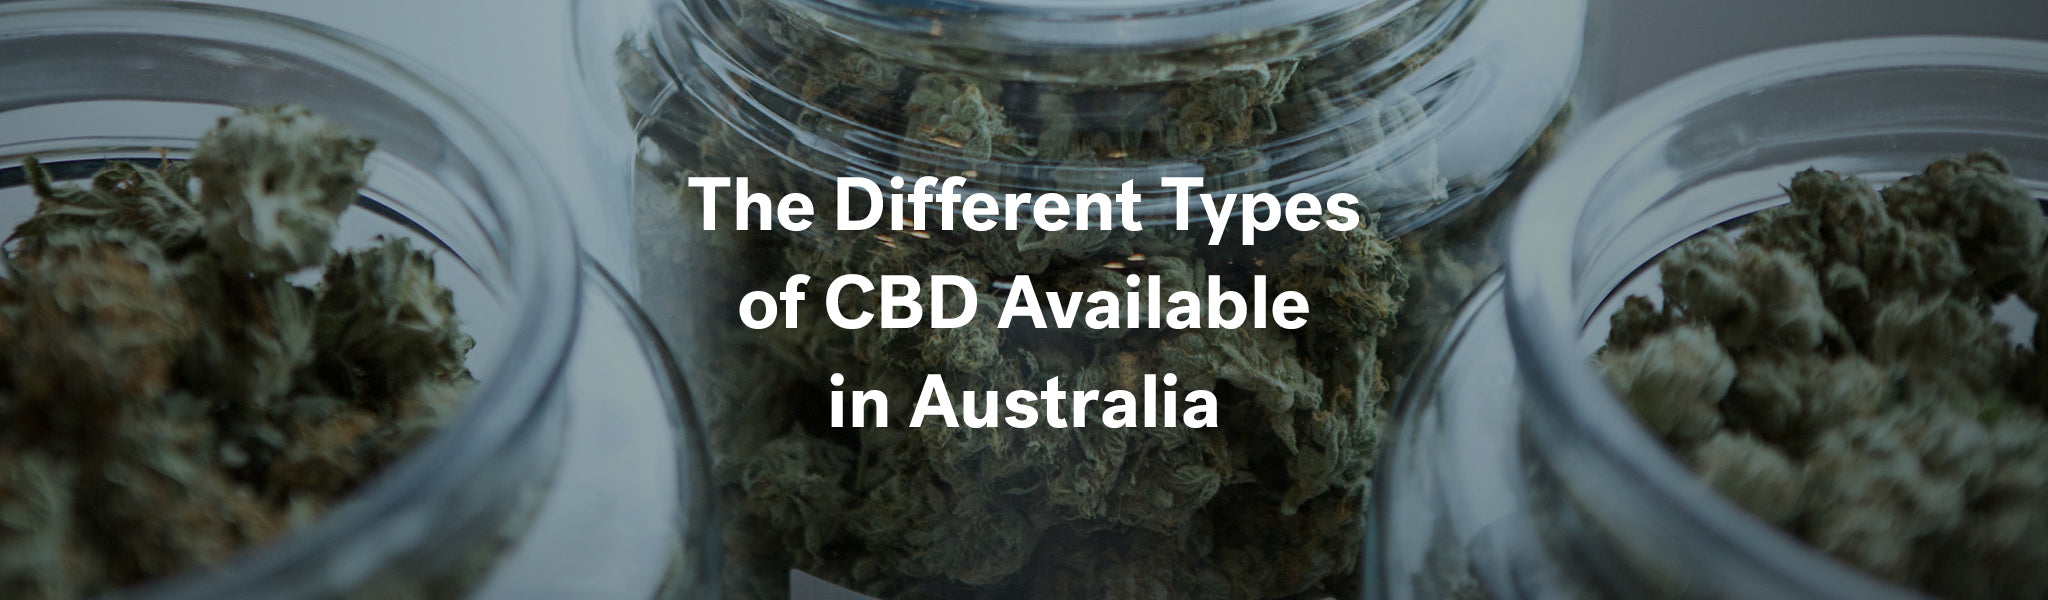 Different Types of CBD in Australia